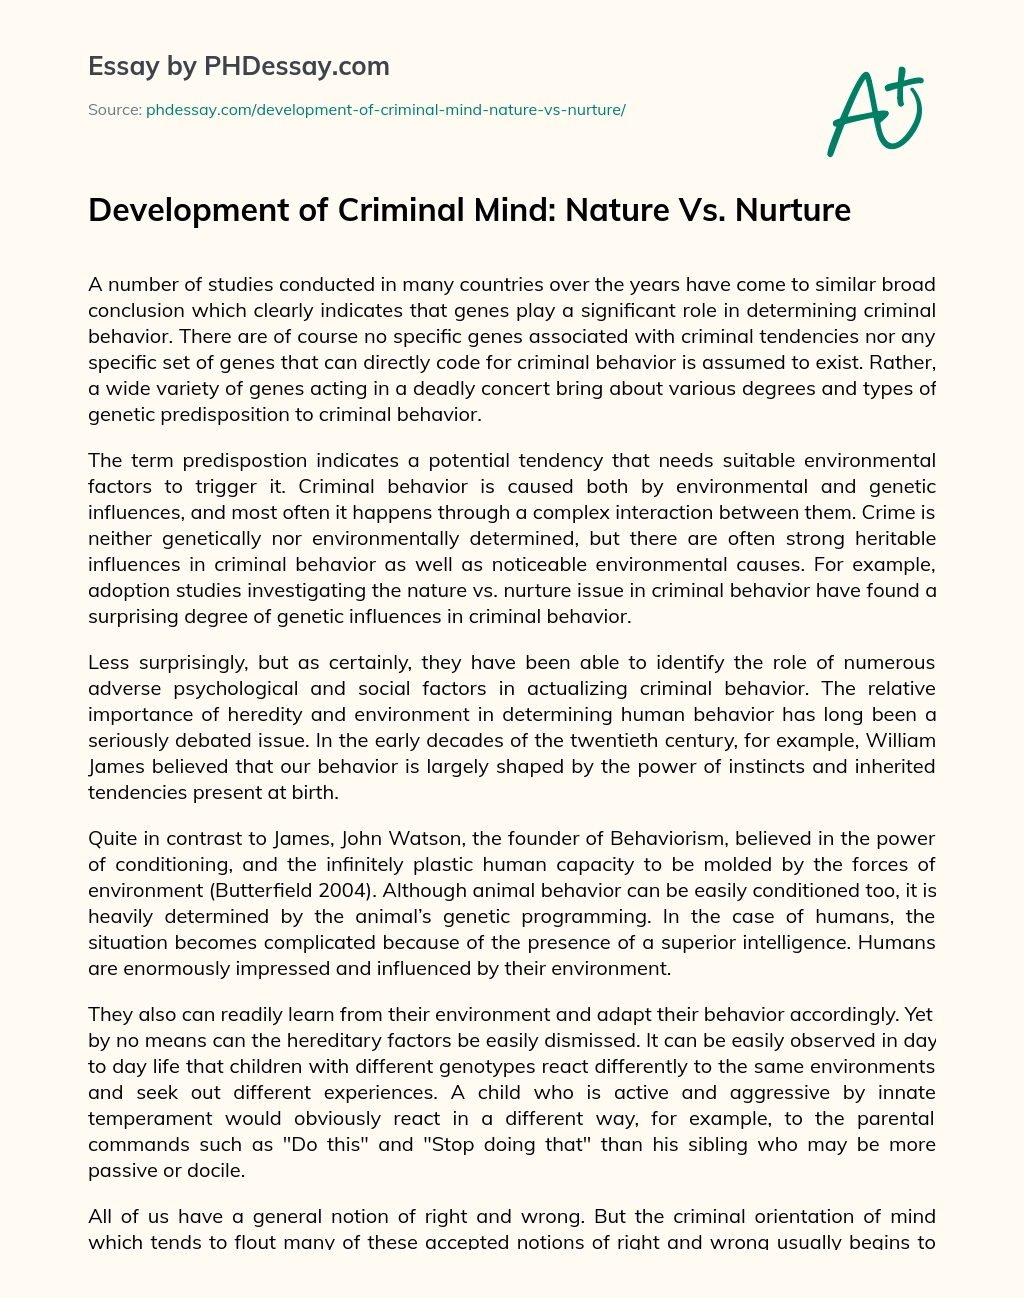 Development of Criminal Mind: Nature Vs. Nurture essay